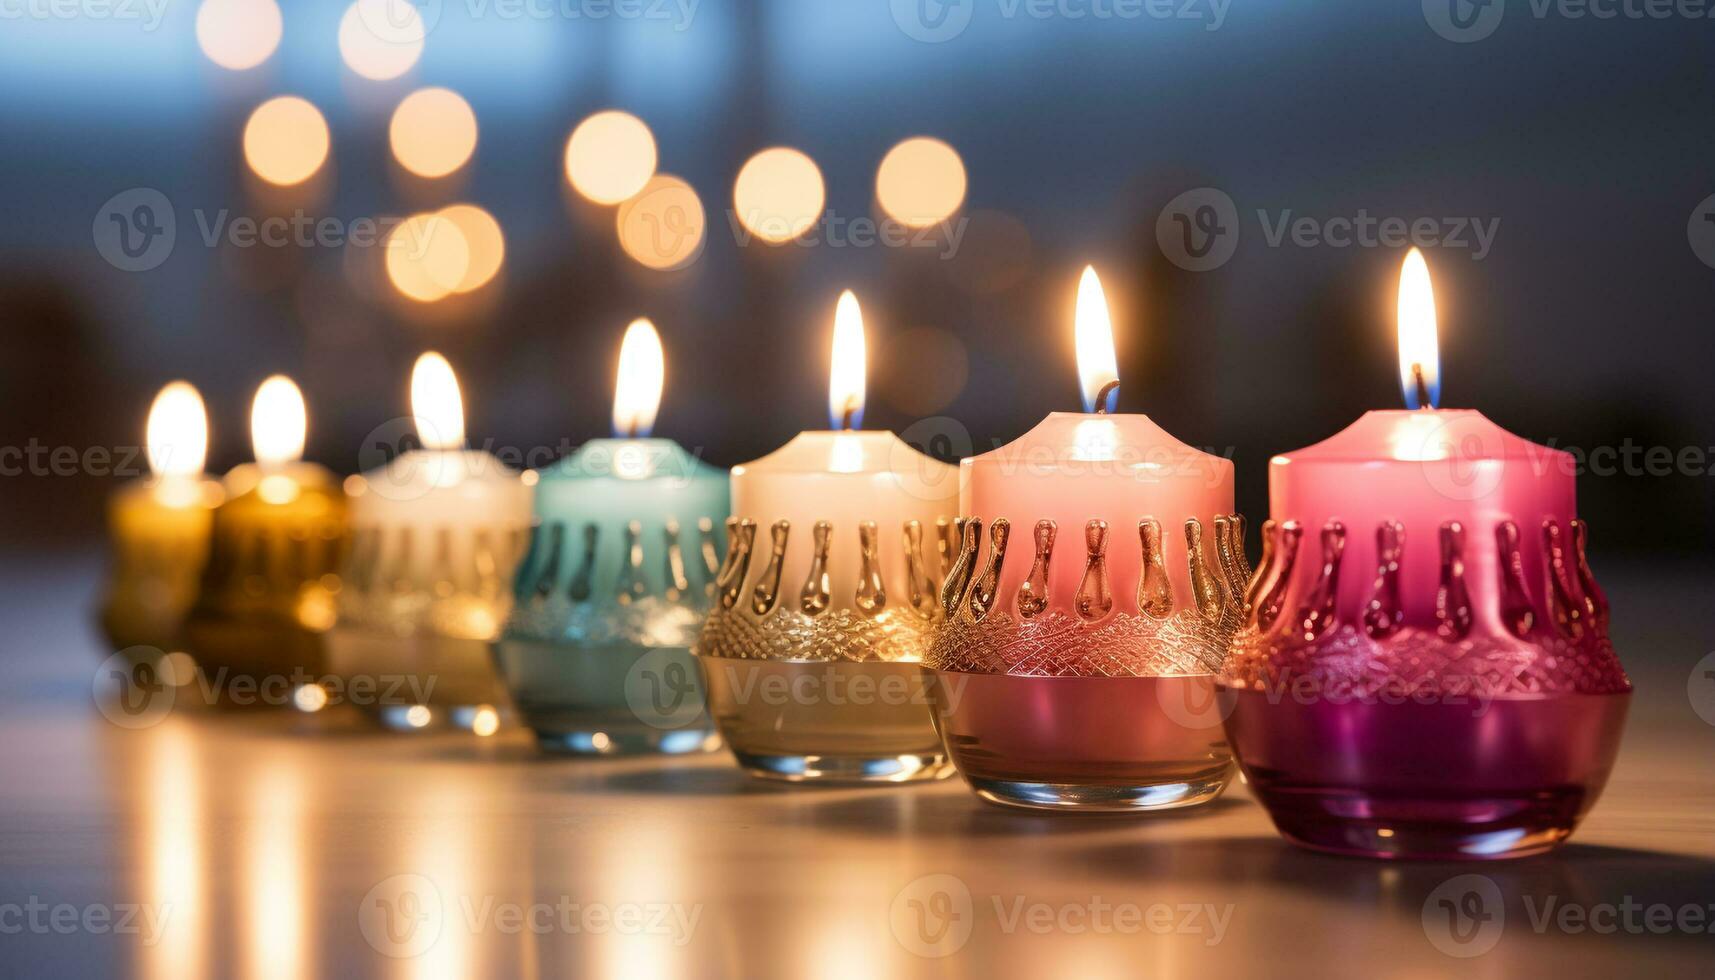 AI generated Candles illuminate the night, symbolizing spirituality and celebration generated by AI photo